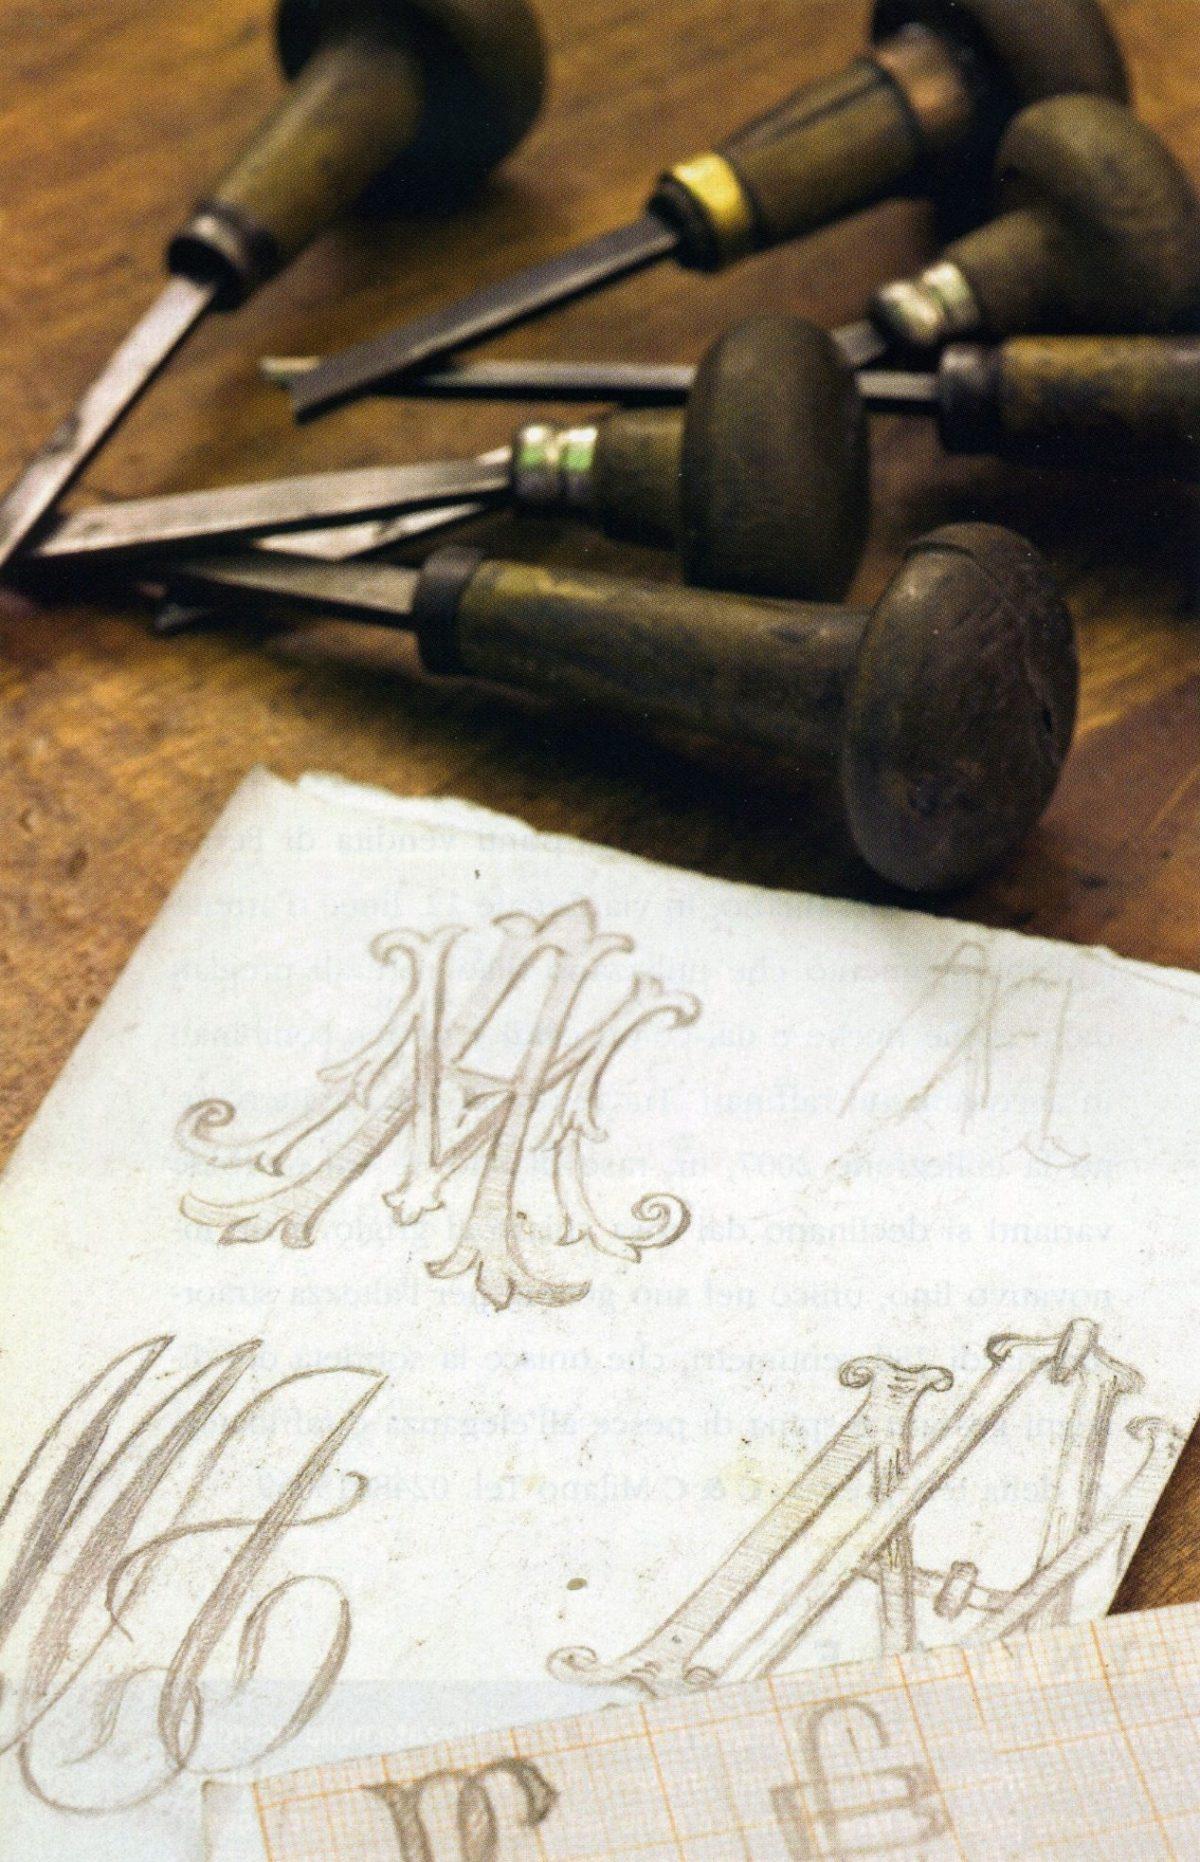 Monogram designs alongside tools for hand engraving. (Lorenzo Michelini/Argentiere Pagliai)